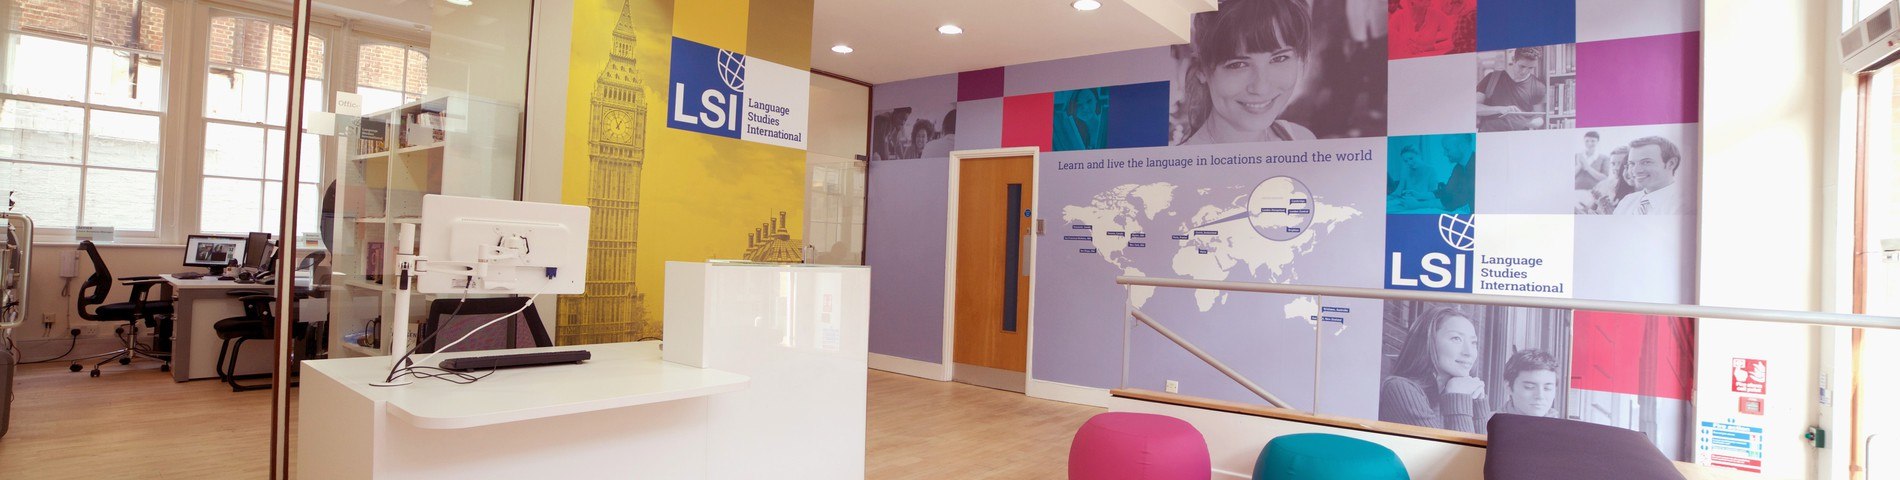 LSI - Language Studies International - Central photo 1